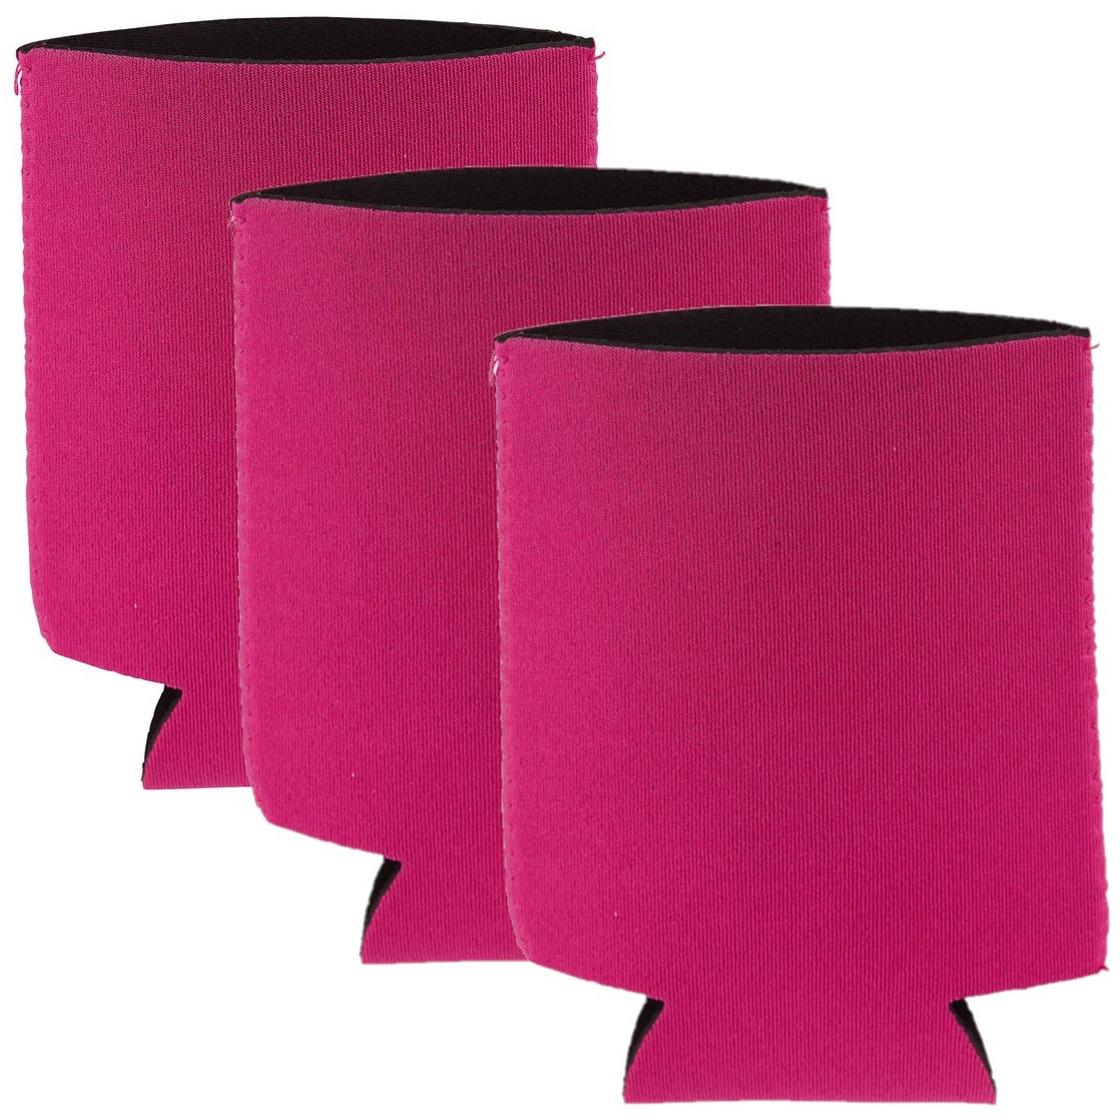 Voordeelset van 10x stuks opvouwbare blikjeskoelers- koel hoesjes fuchsia roze